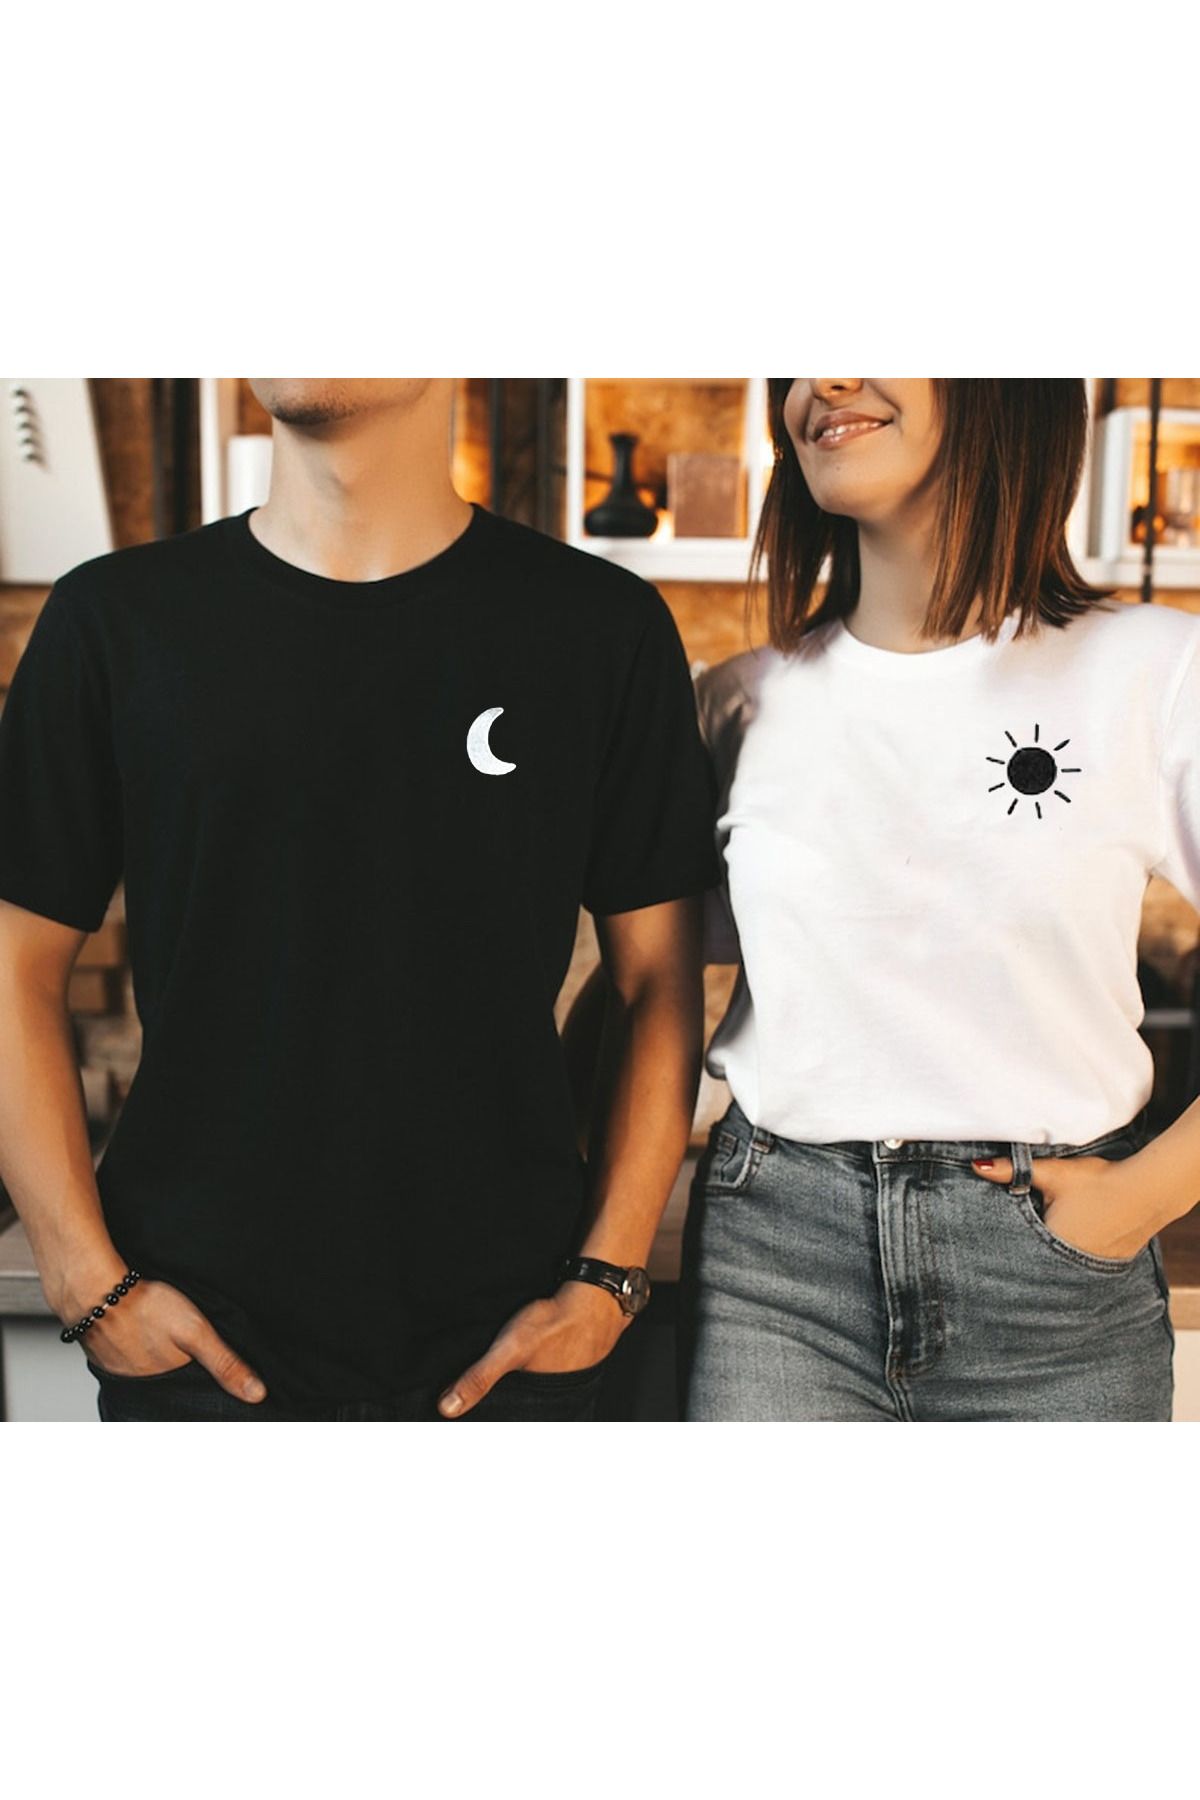 LEIVOR Ay & Güneş Tasarım Sevgili Çift Kombini Tshirt 2'li Takım